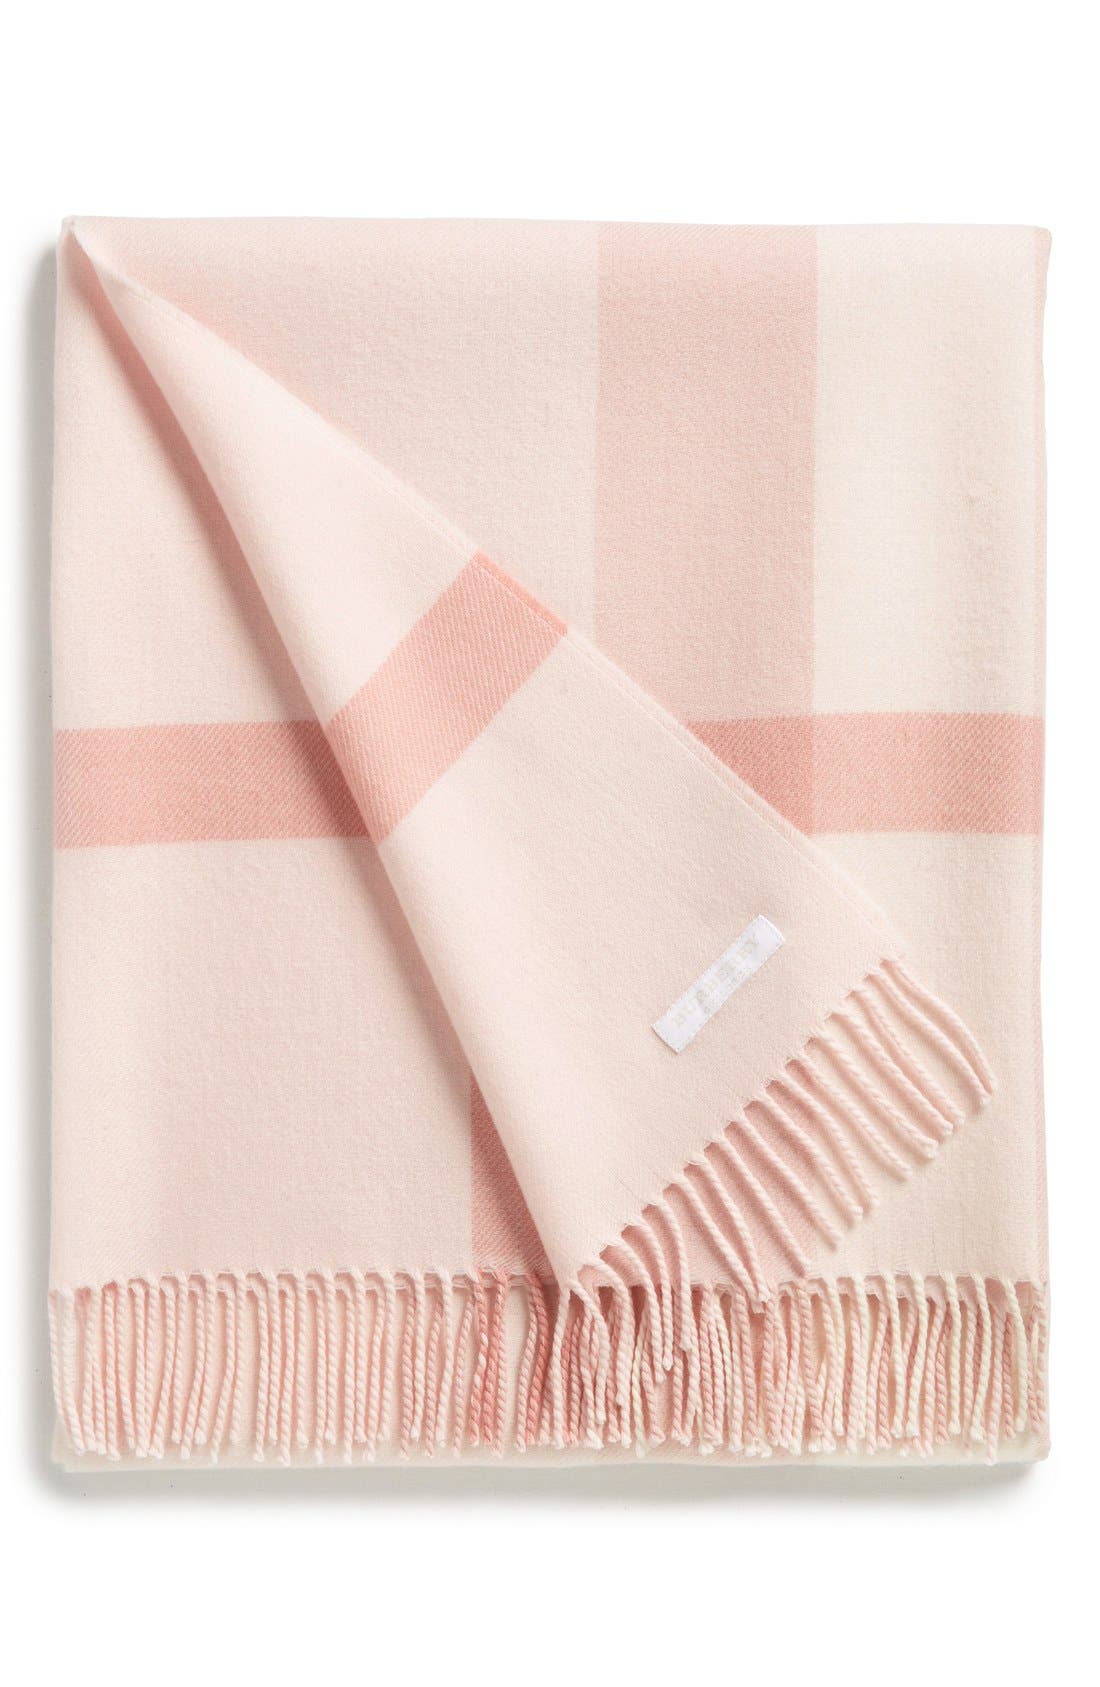 burberry baby blanket pink